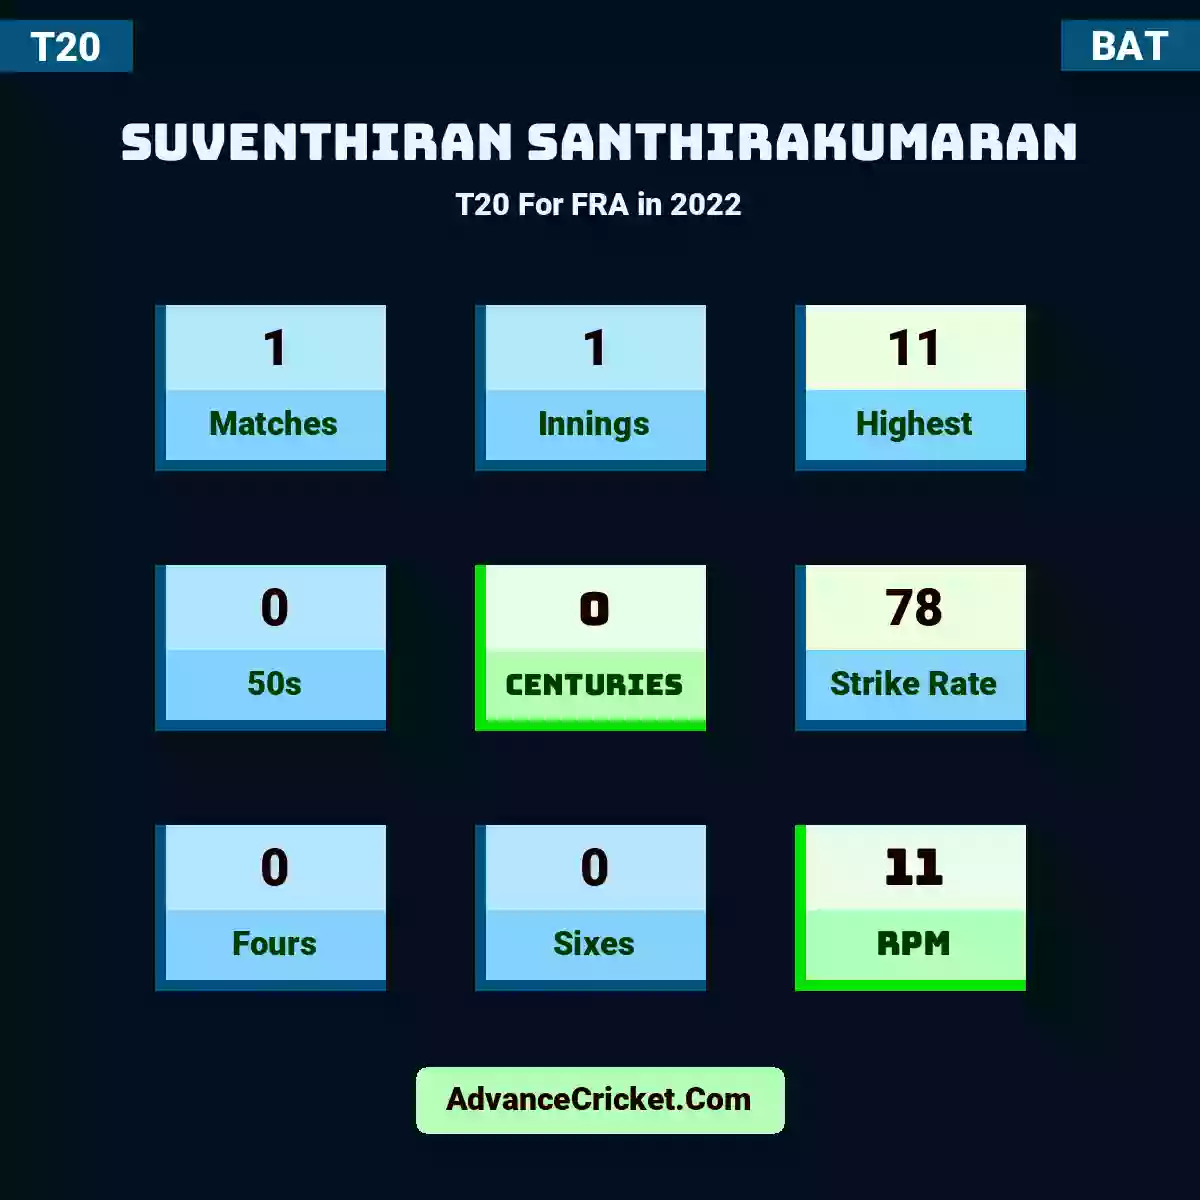 Suventhiran Santhirakumaran T20  For FRA in 2022, Suventhiran Santhirakumaran played 1 matches, scored 11 runs as highest, 0 half-centuries, and 0 centuries, with a strike rate of 78. S.Santhirakumaran hit 0 fours and 0 sixes, with an RPM of 11.